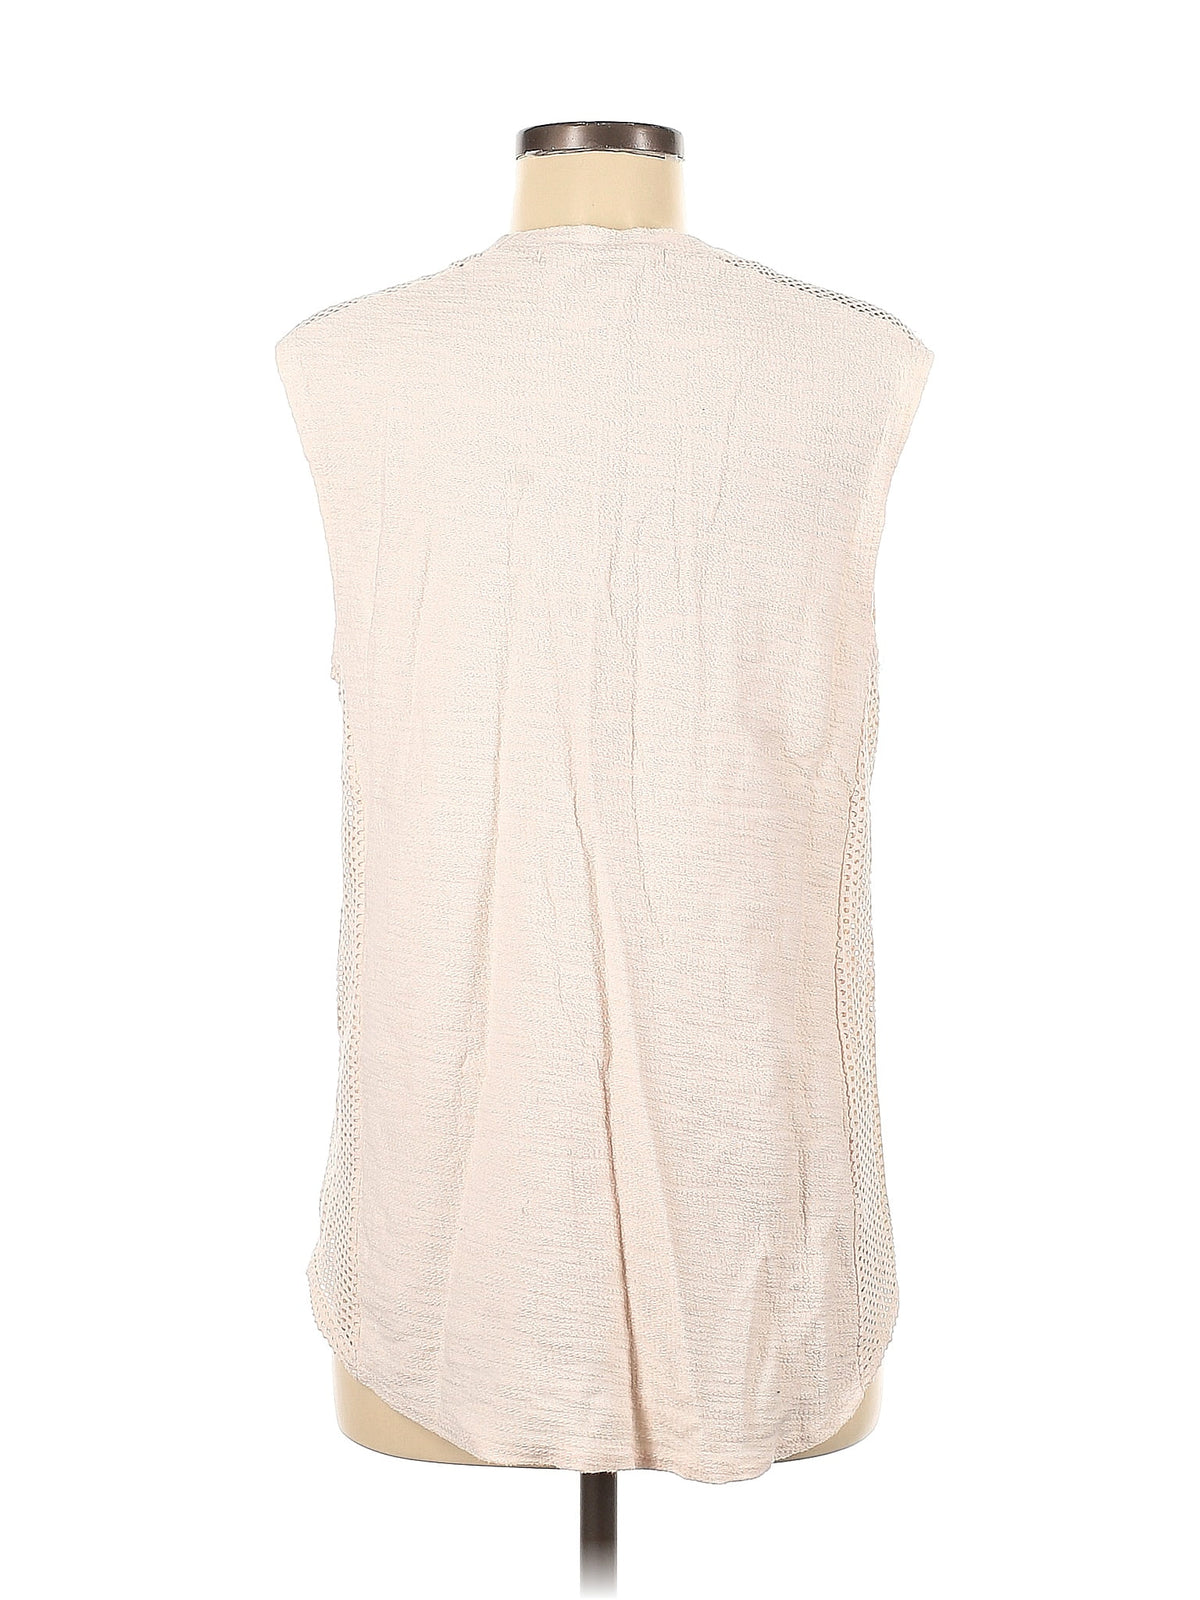 Sleeveless T Shirt size - M